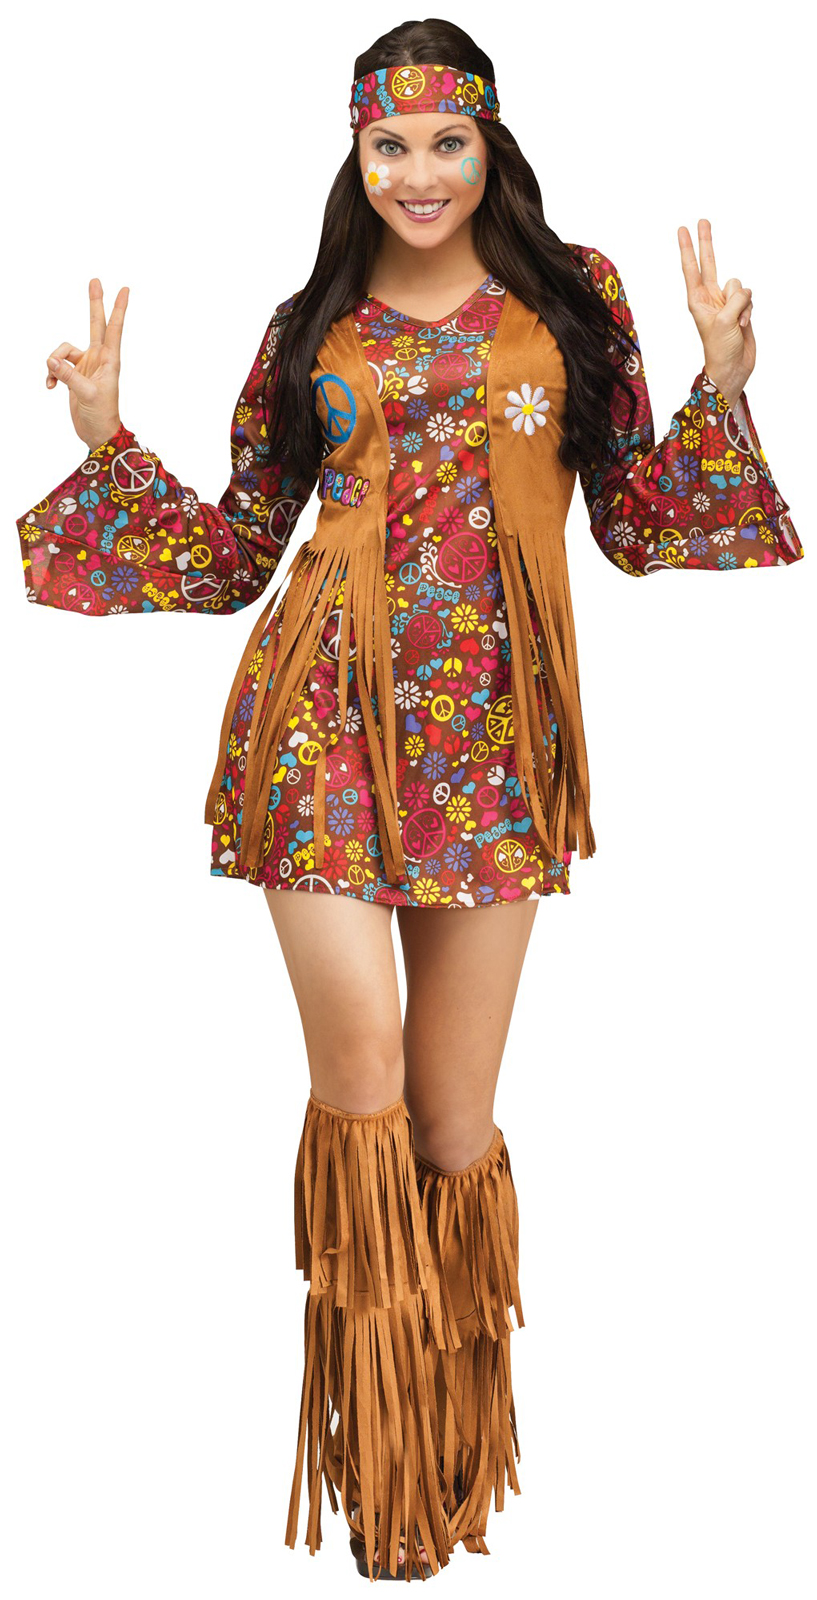 Fun World Women's Peace and Love Hippie Adult Costume - Brown - Medium/Large (10-14)